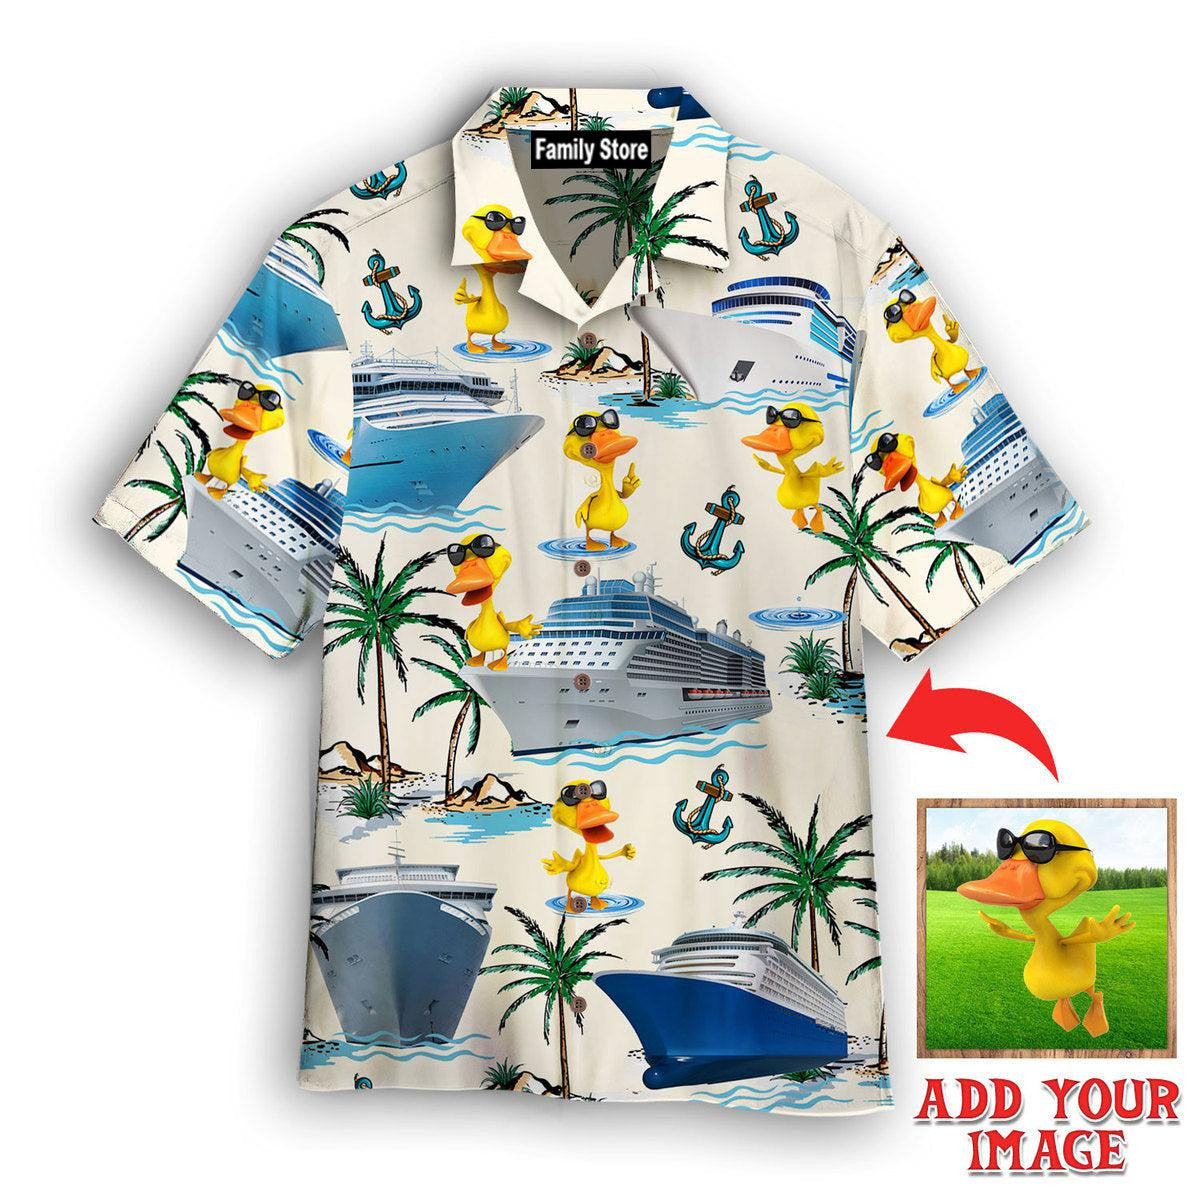 Padres Hawaiian Shirt San Diego Padres White Custom Hawaiian Shirts -  Upfamilie Gifts Store